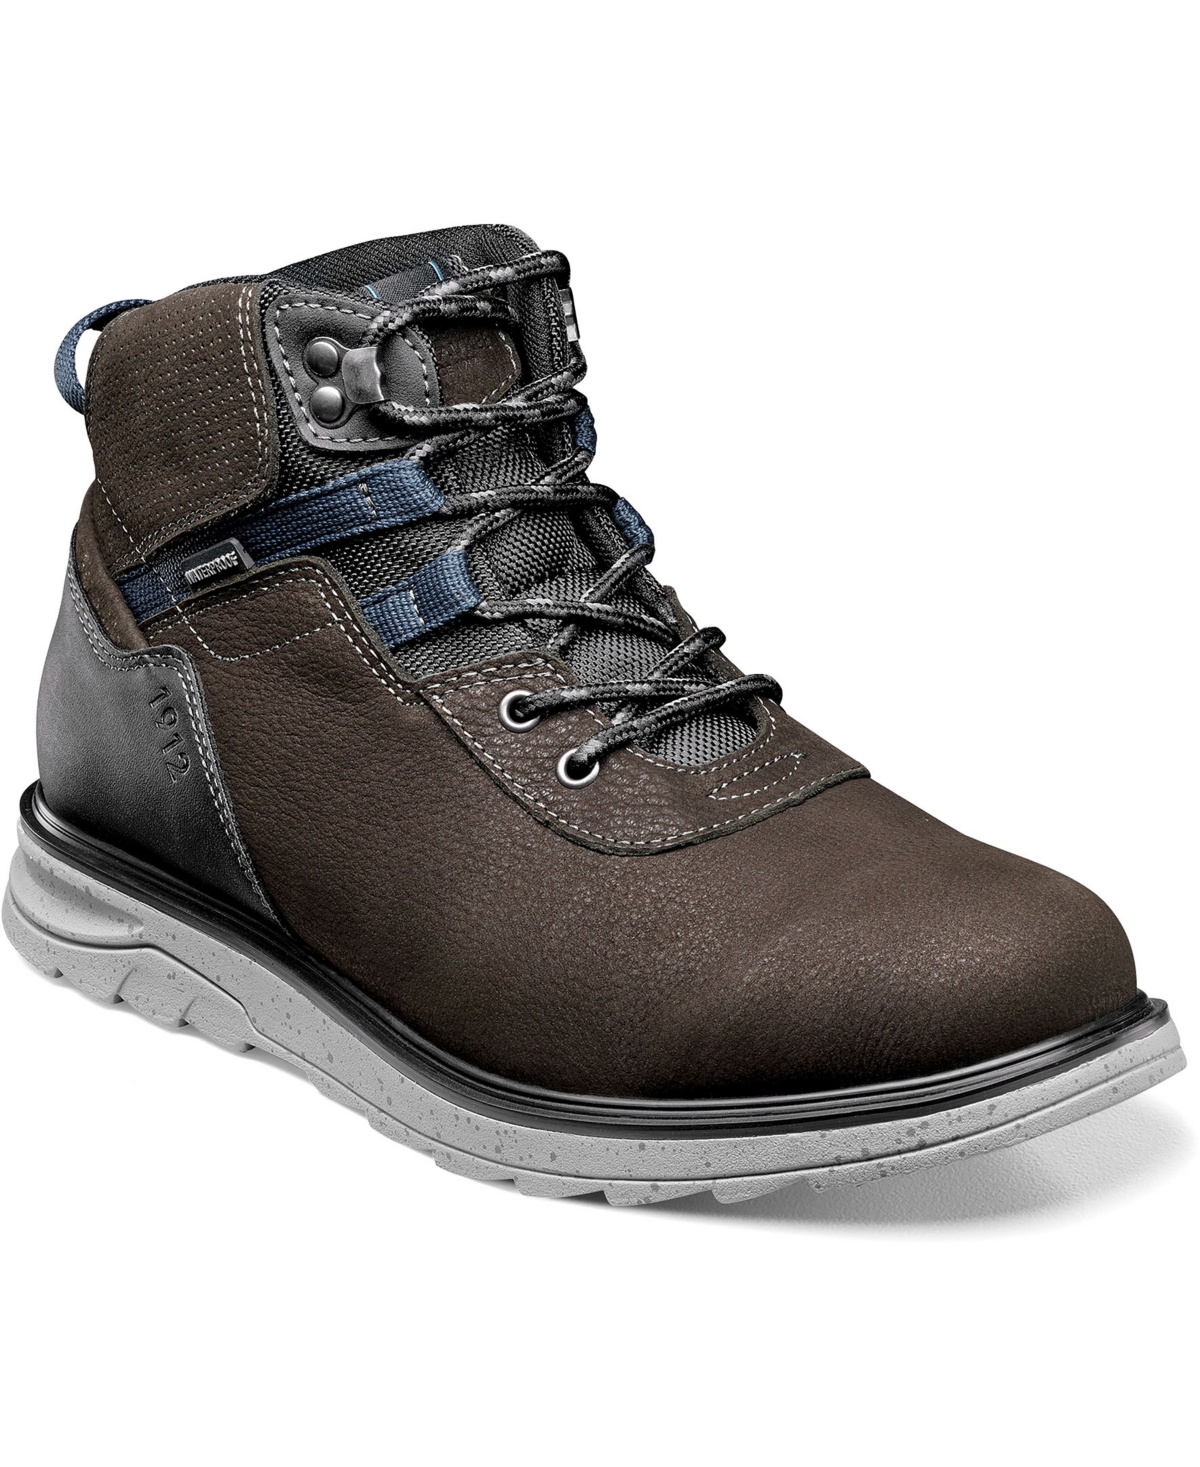 Men's Luxor Water Resistant Plain Toe Alpine Boots - Charcoal